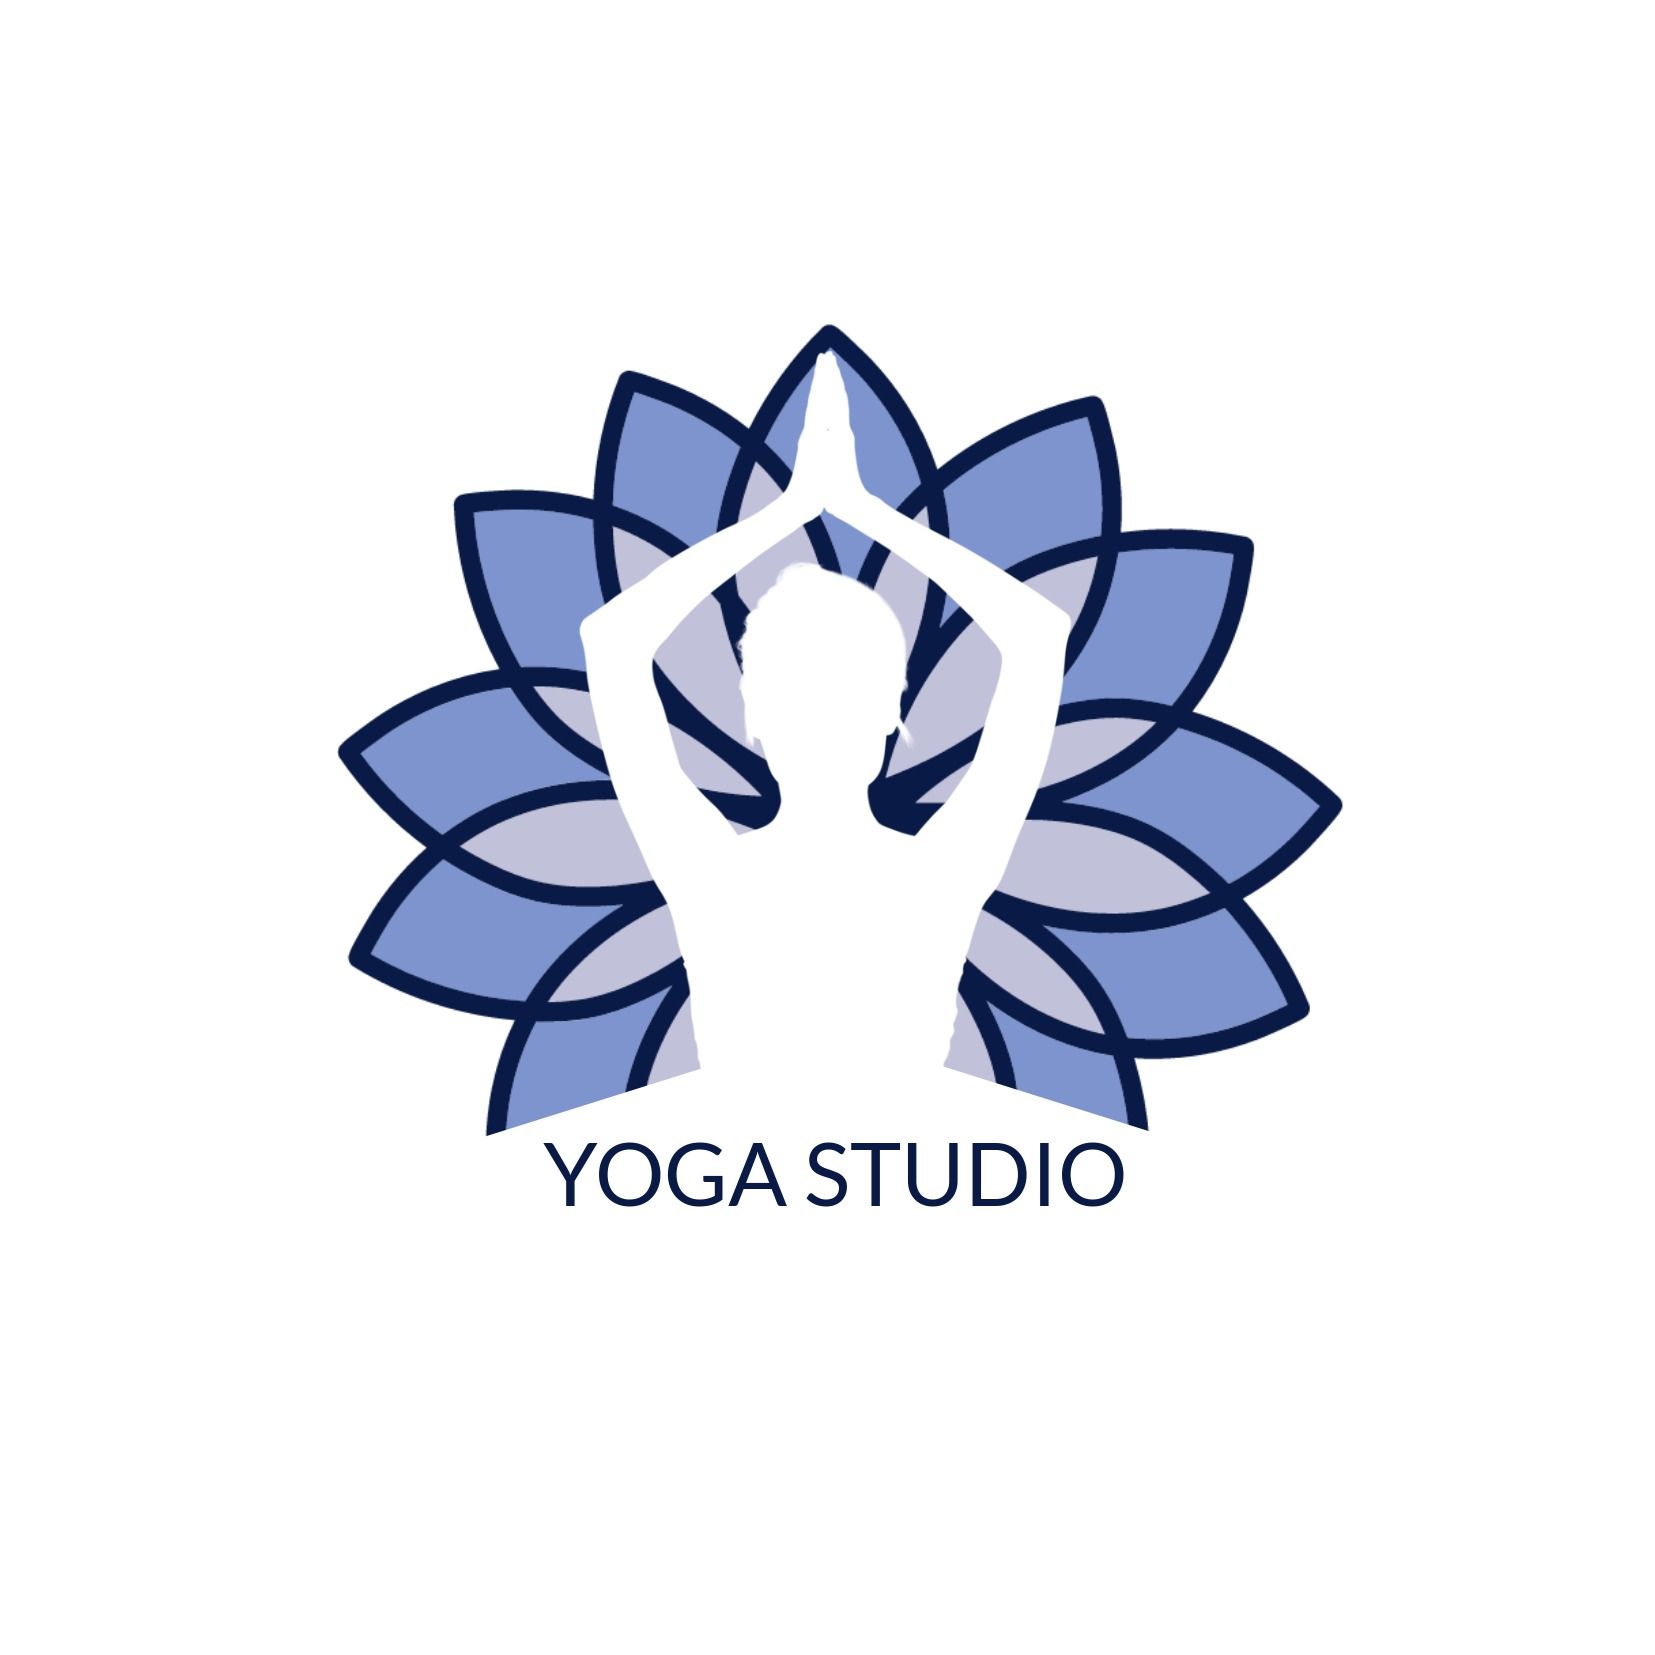 Kreative Logo-Designs für Yoga-Studios